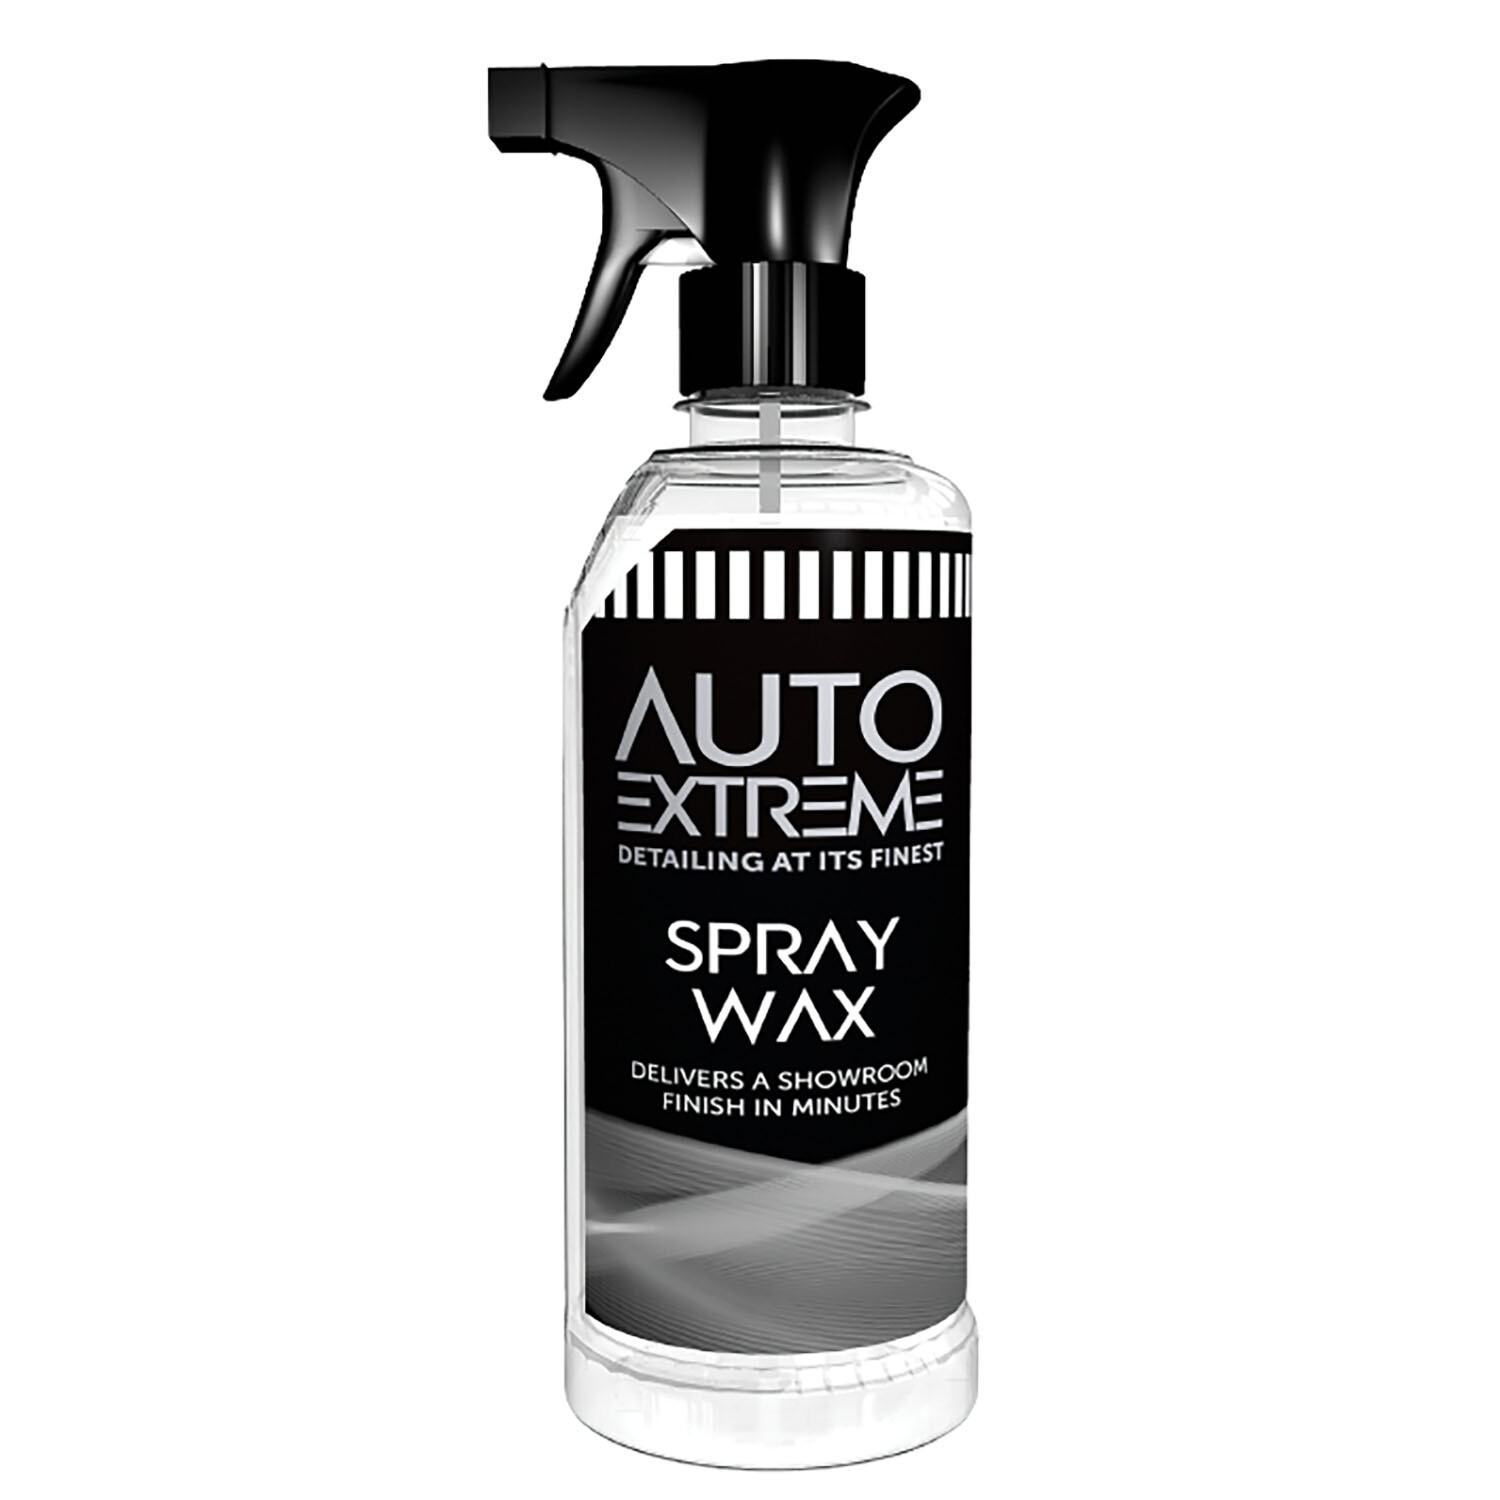 Auto Extreme Spray Wax Image